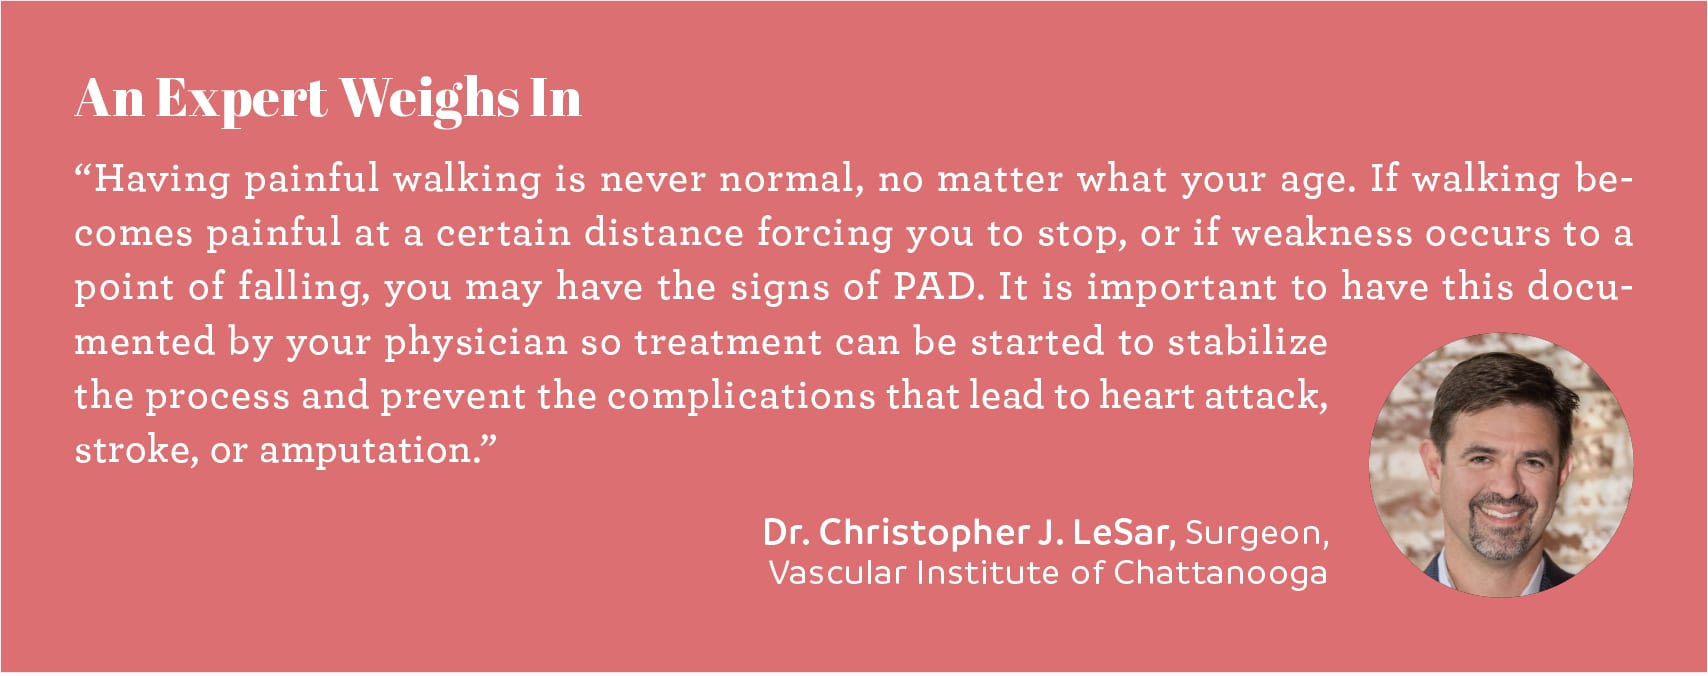 expert opinion chattanooga doctor christopher j lesar vascular institute of chattanooga surgeon